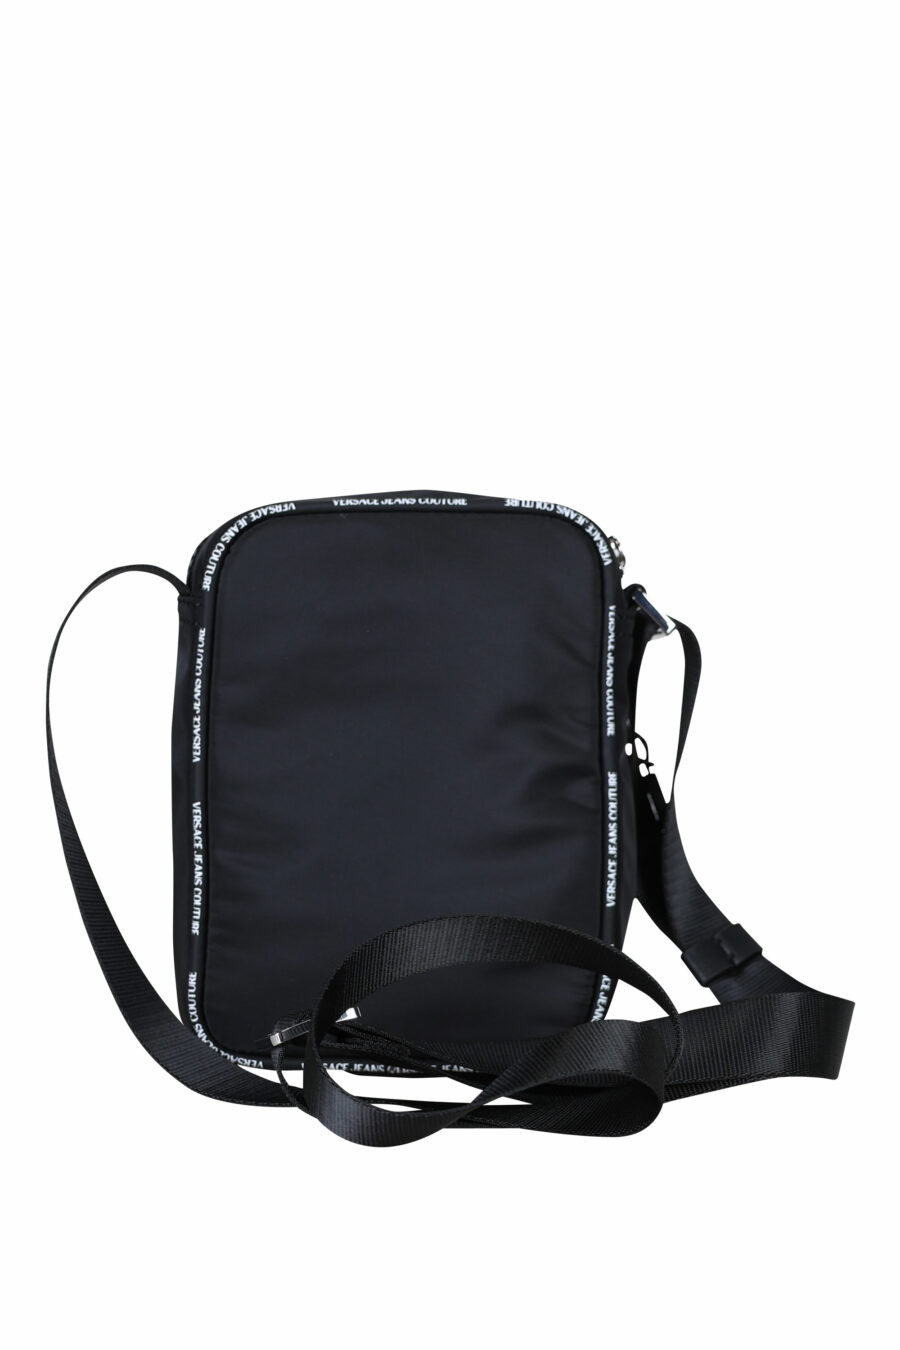 Black crossbody bag with white mini-logo lettering on ribbon - 8052019409307 2